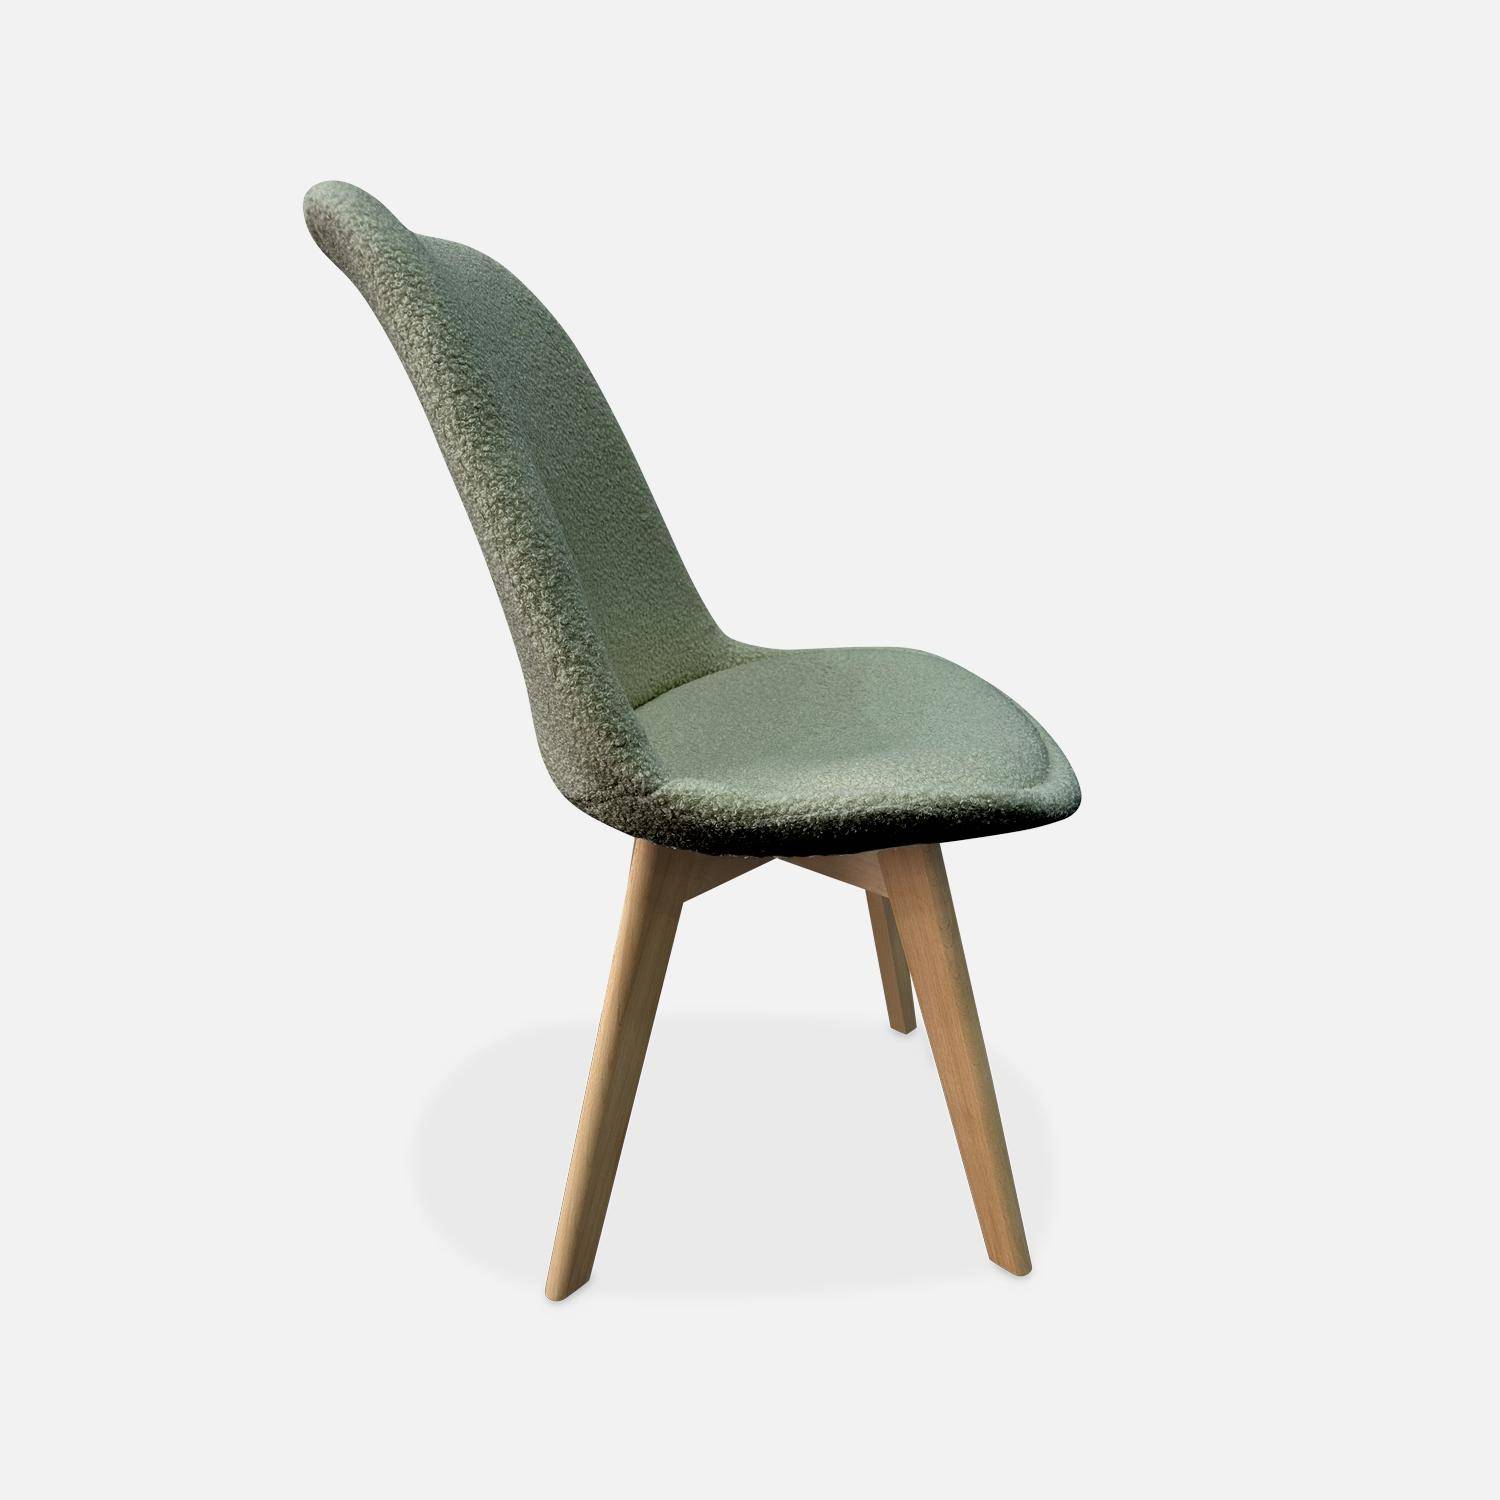 4er Set skandinavische Stühle mit blaßgrünem Bouclé-Bezug und Buchenholzbeinen - NILS ,sweeek,Photo3